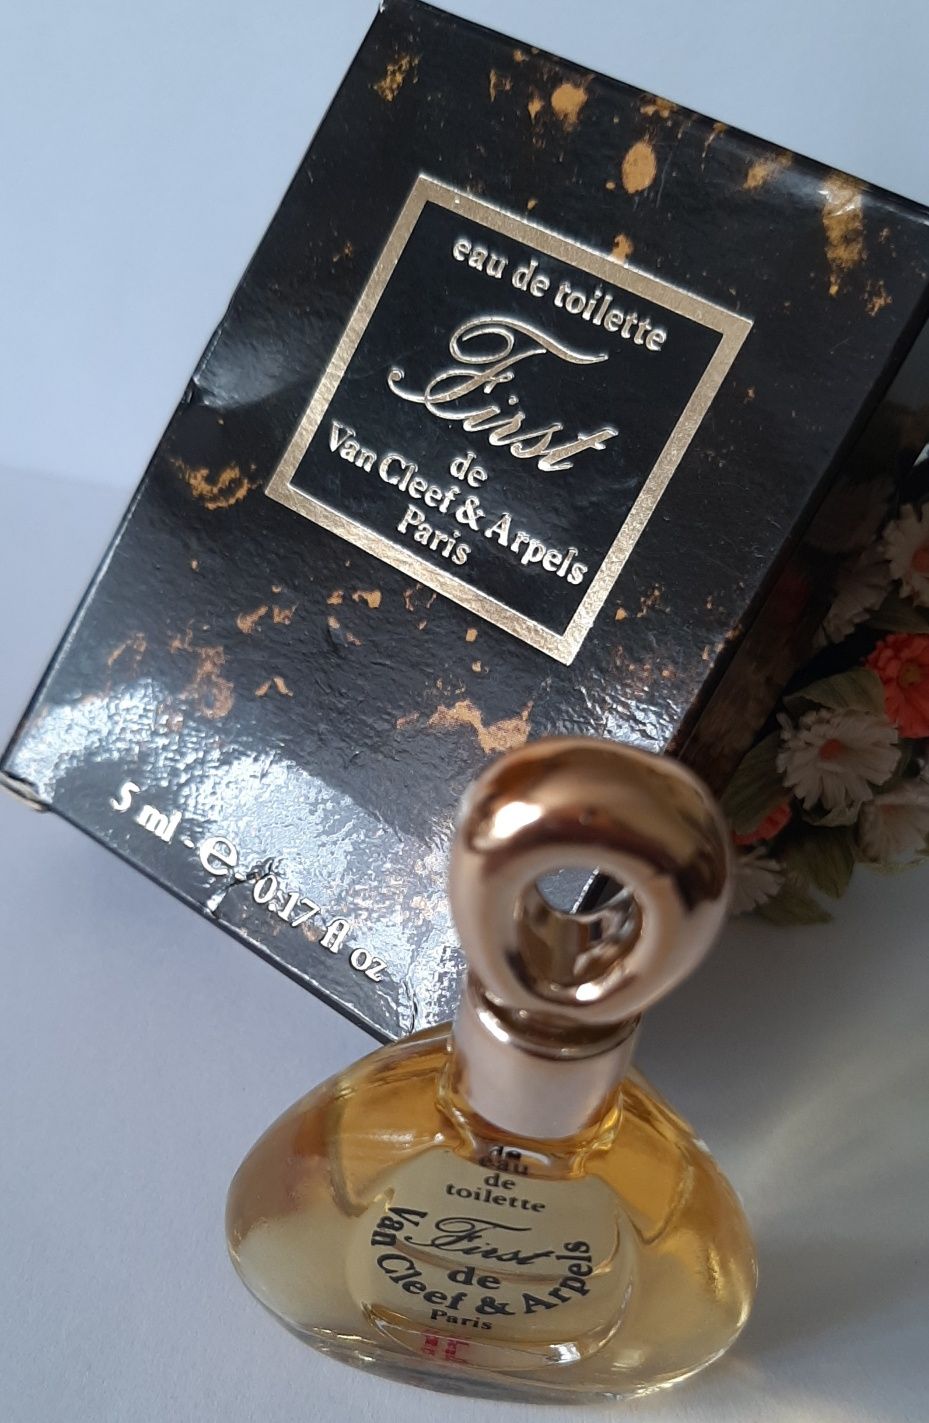 Van Cleef & Arpels First edt 5 ml, miniatura vintage